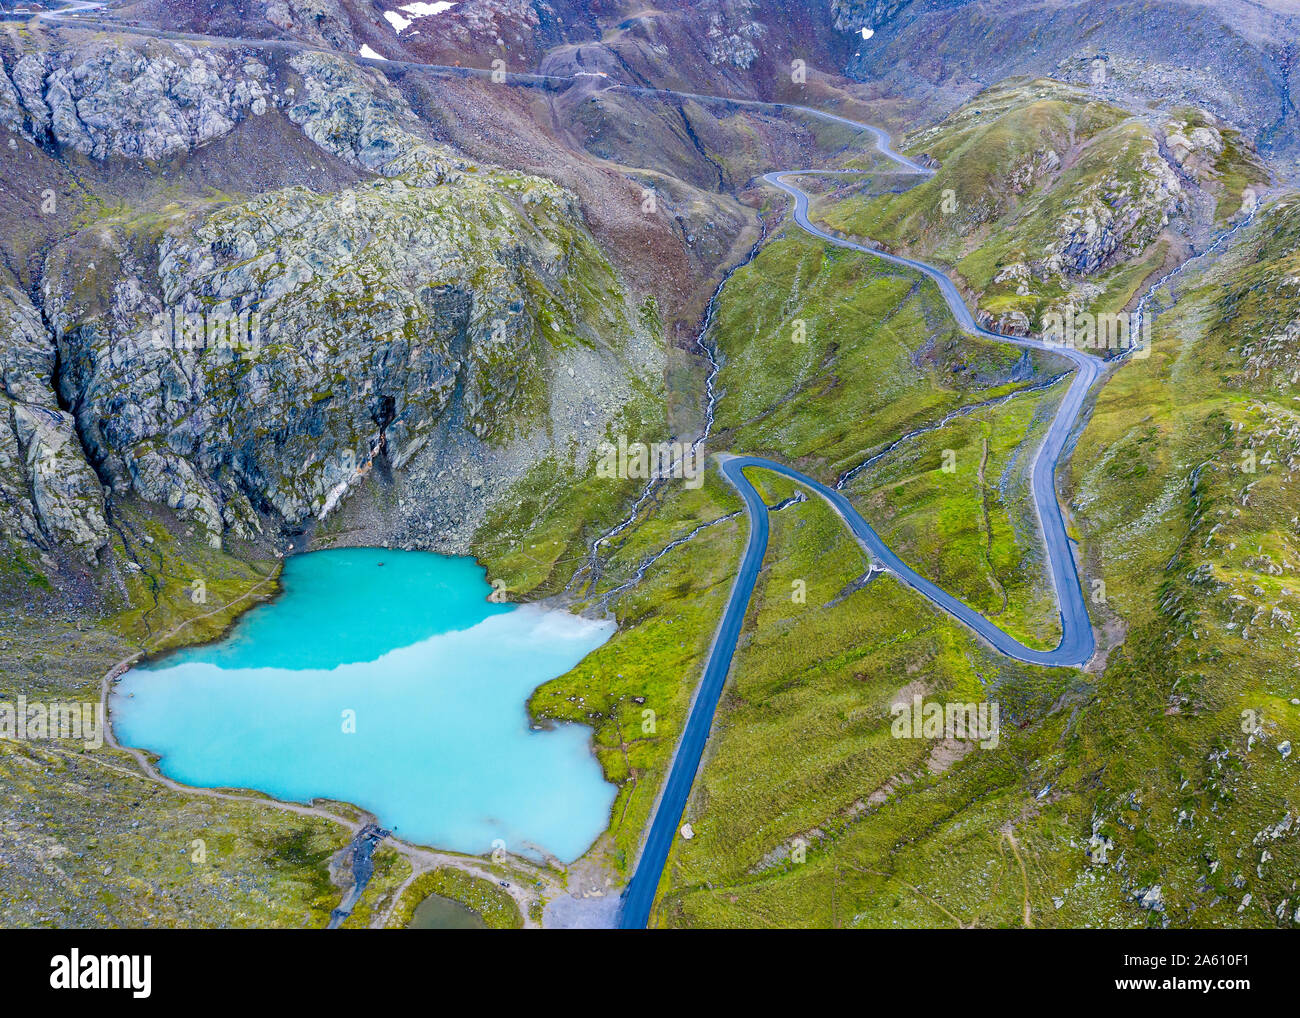 Austria, Tirol, Kauner Valley Glacier Road and Lake Weisssee Stock Photo